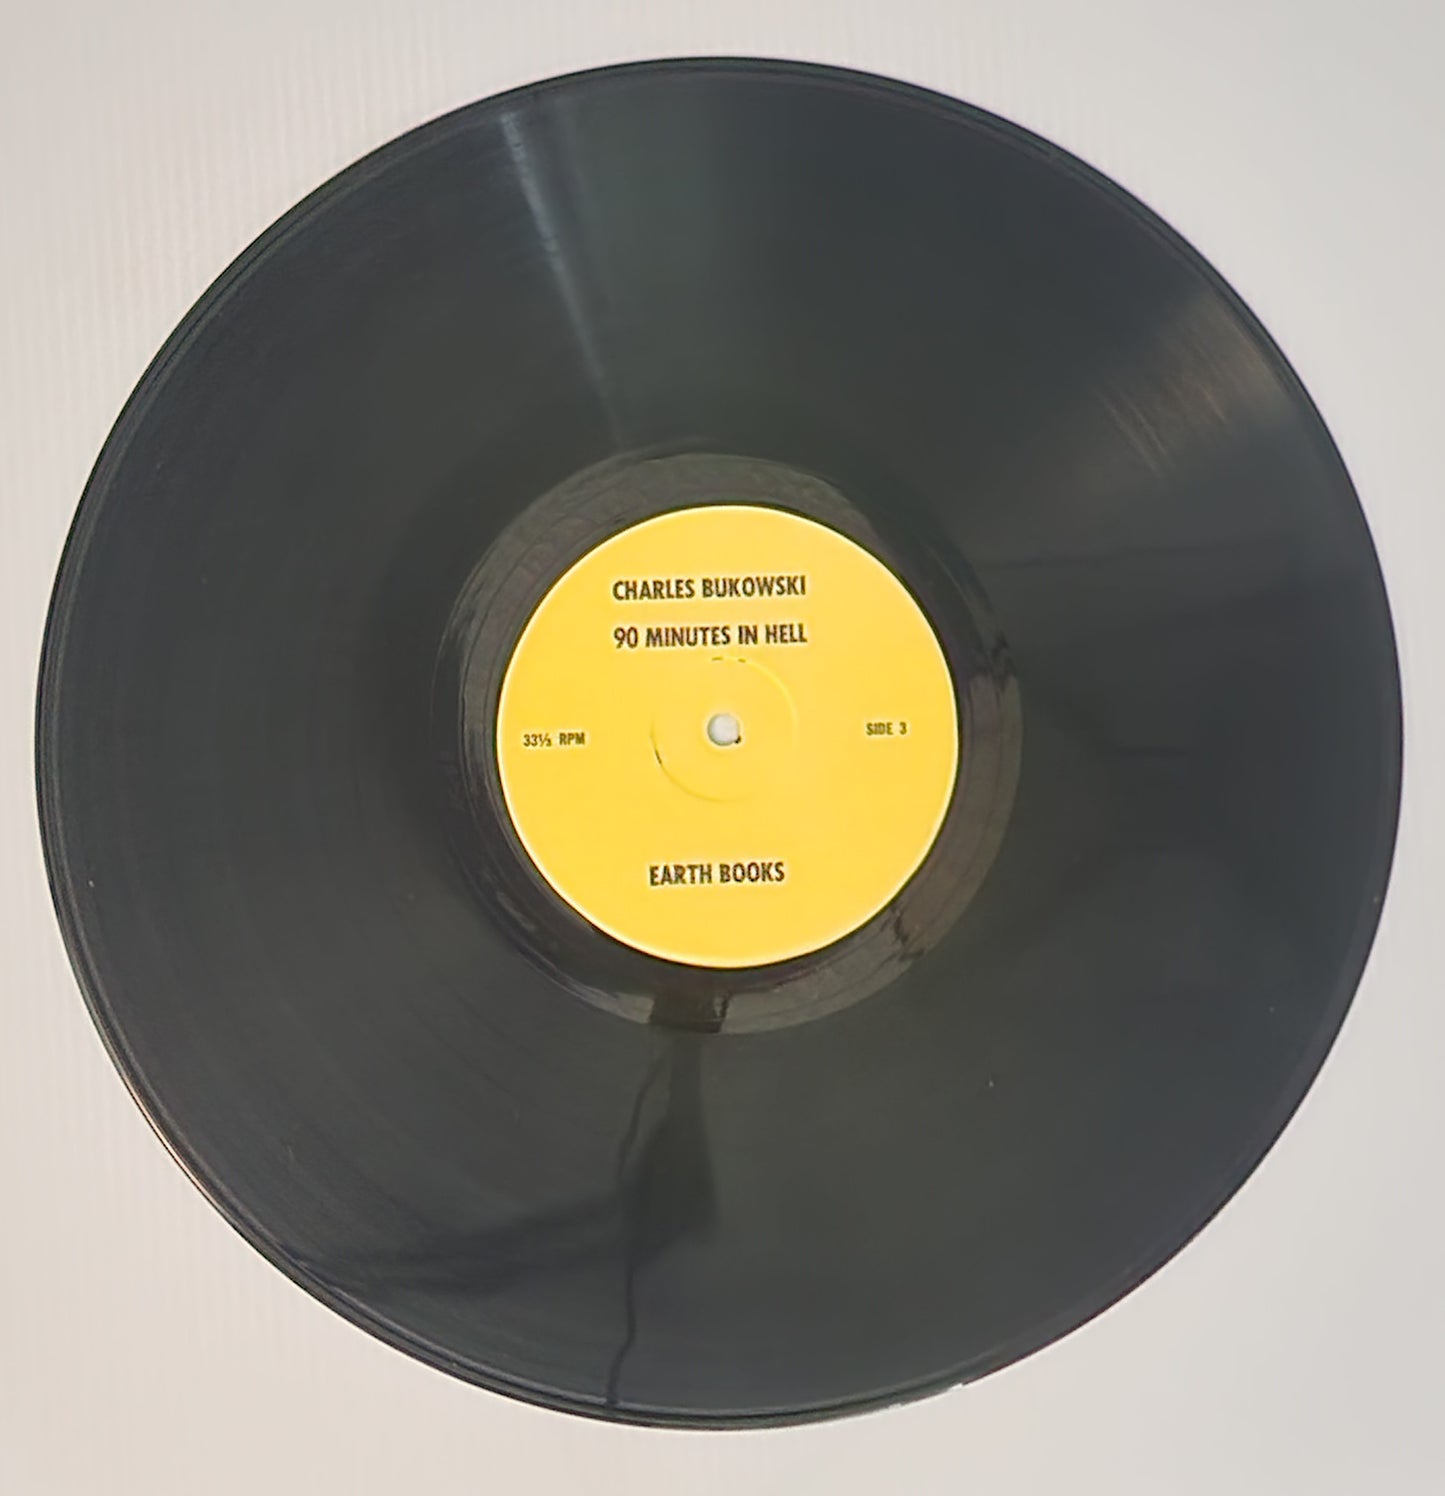 Bukowski: “90 Minutes in Hell” Vinyl LP (1977)